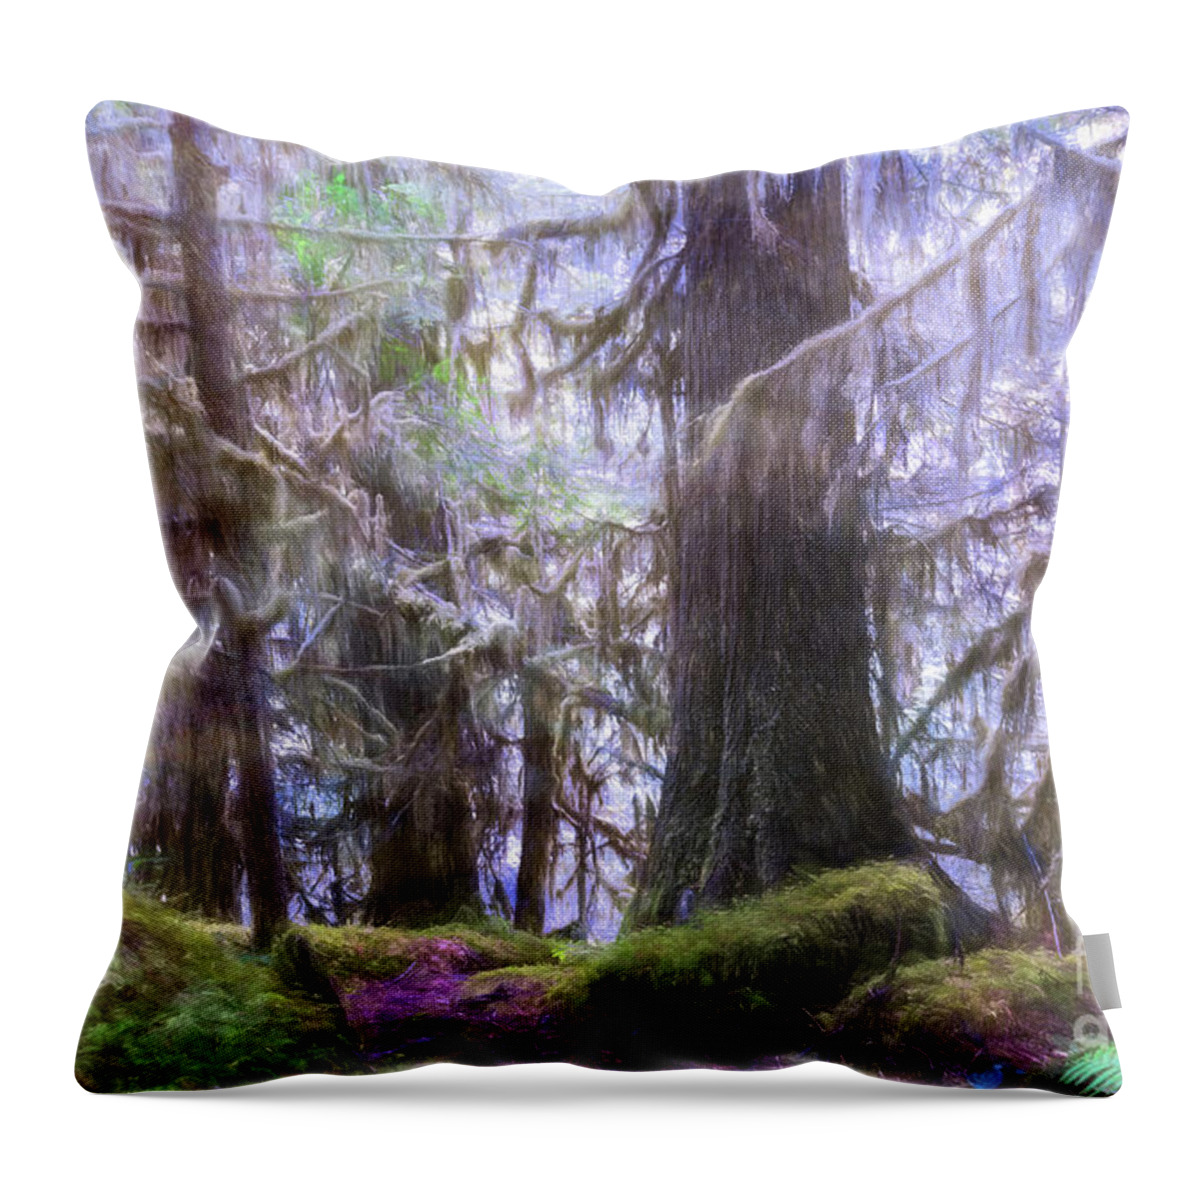 Green Throw Pillow featuring the digital art Olympic Rain Forest by Jean OKeeffe Macro Abundance Art